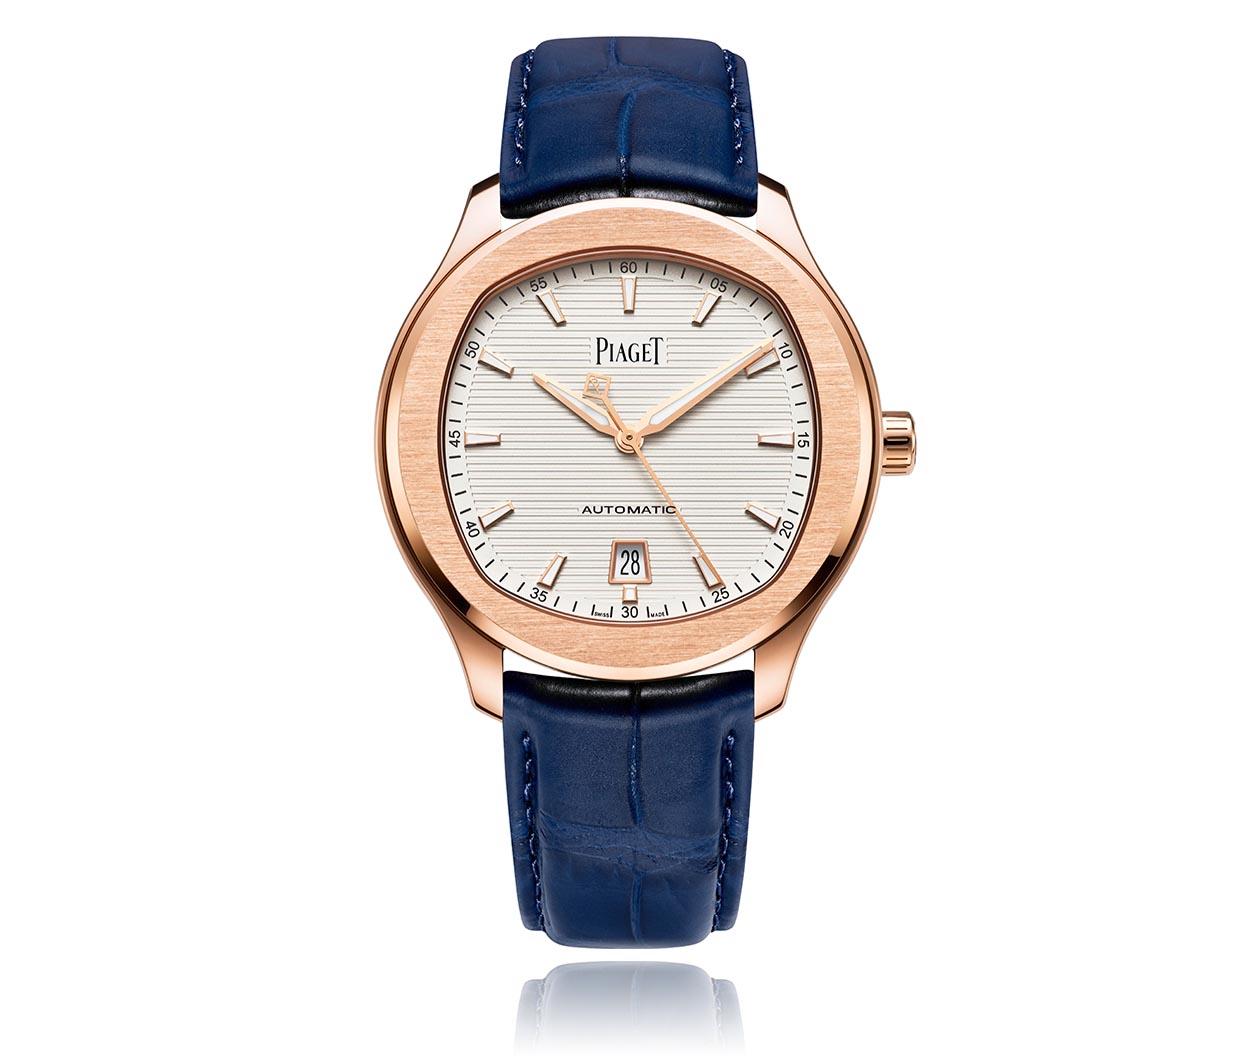 Piaget Polo watch G0A43010 Flatlay FINAL